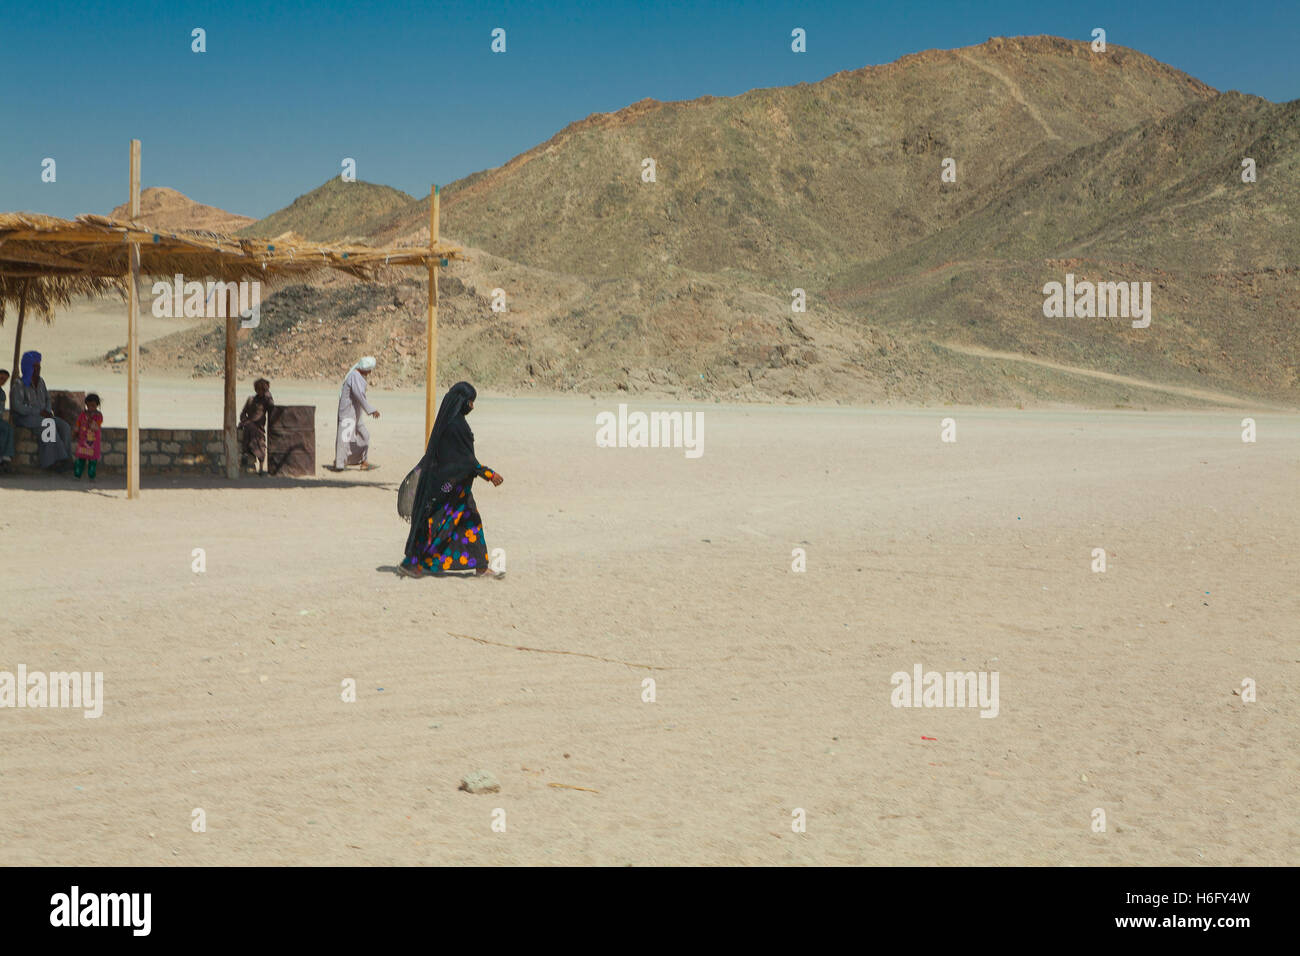 bedouin woman in black burqa walking in the desert Stock Photo